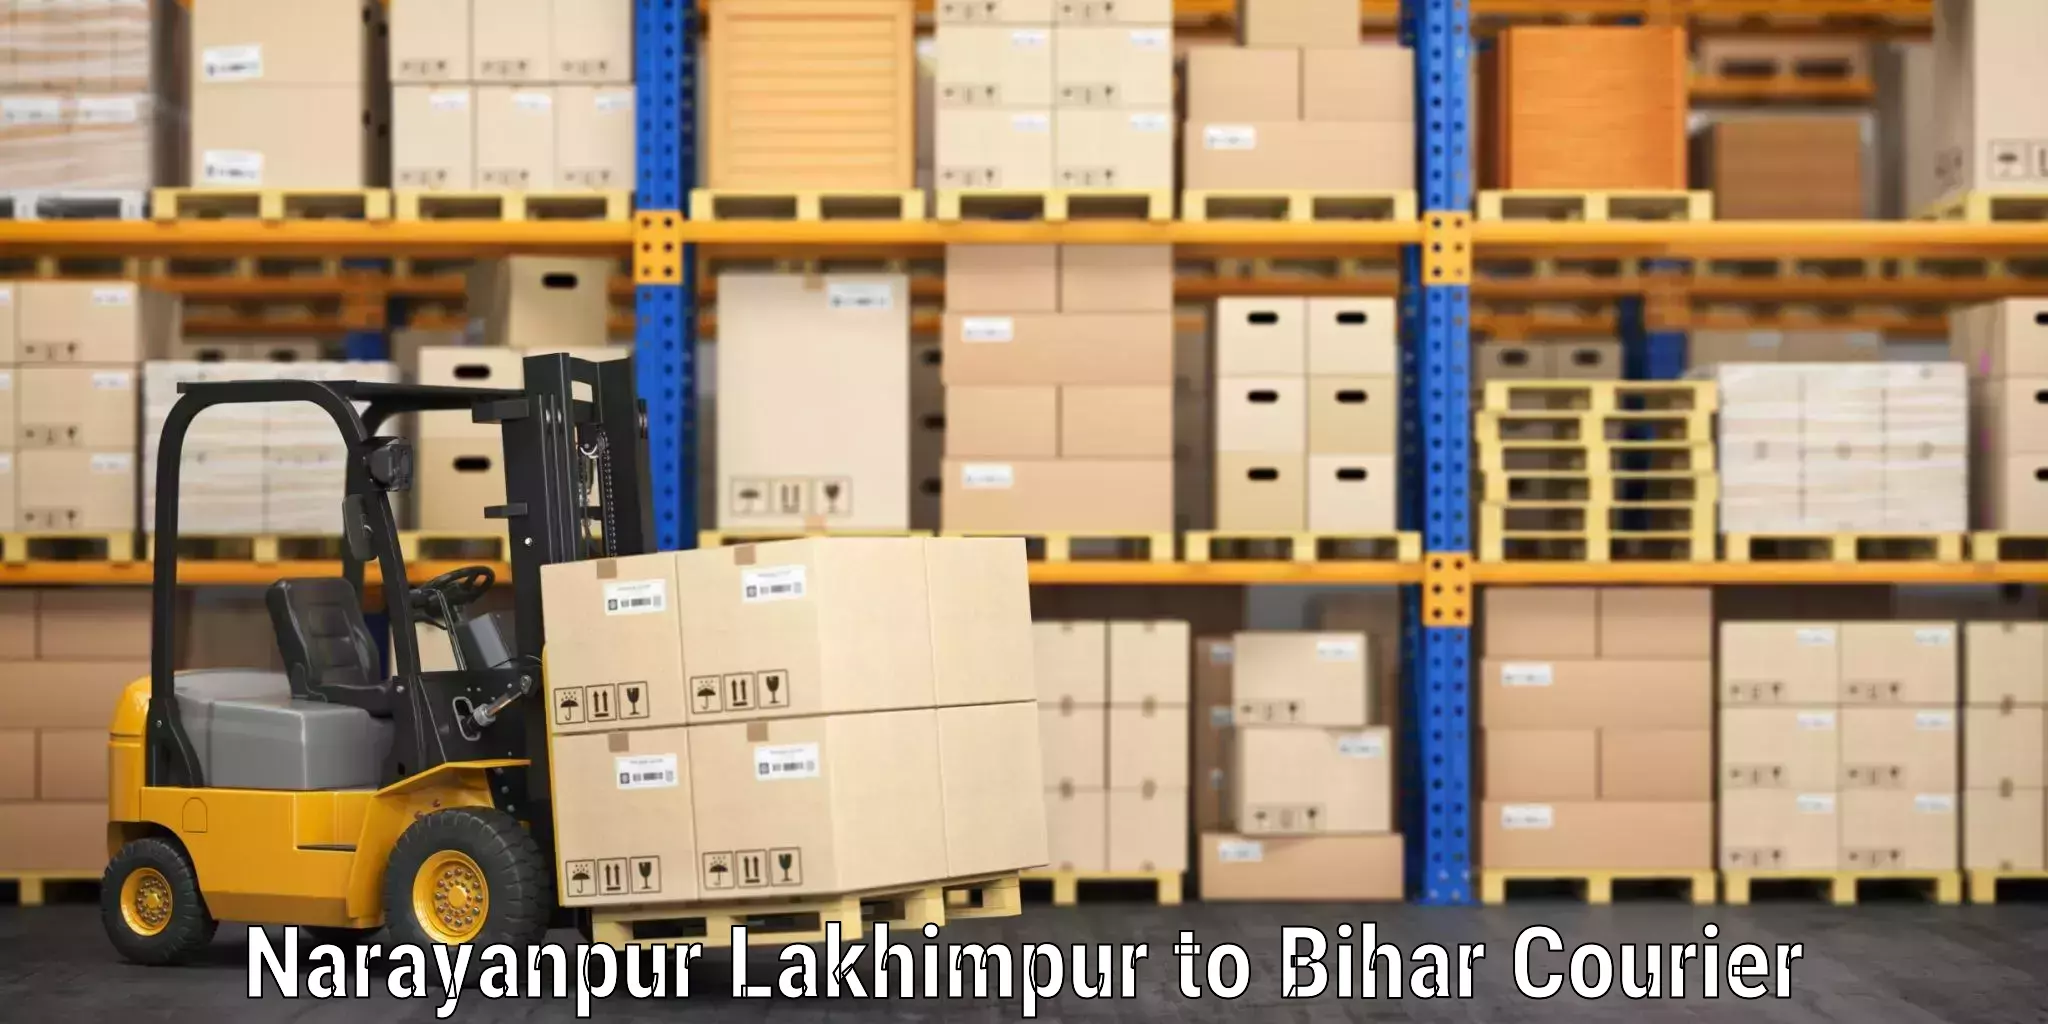 Urgent luggage shipment Narayanpur Lakhimpur to Dholi Moraul